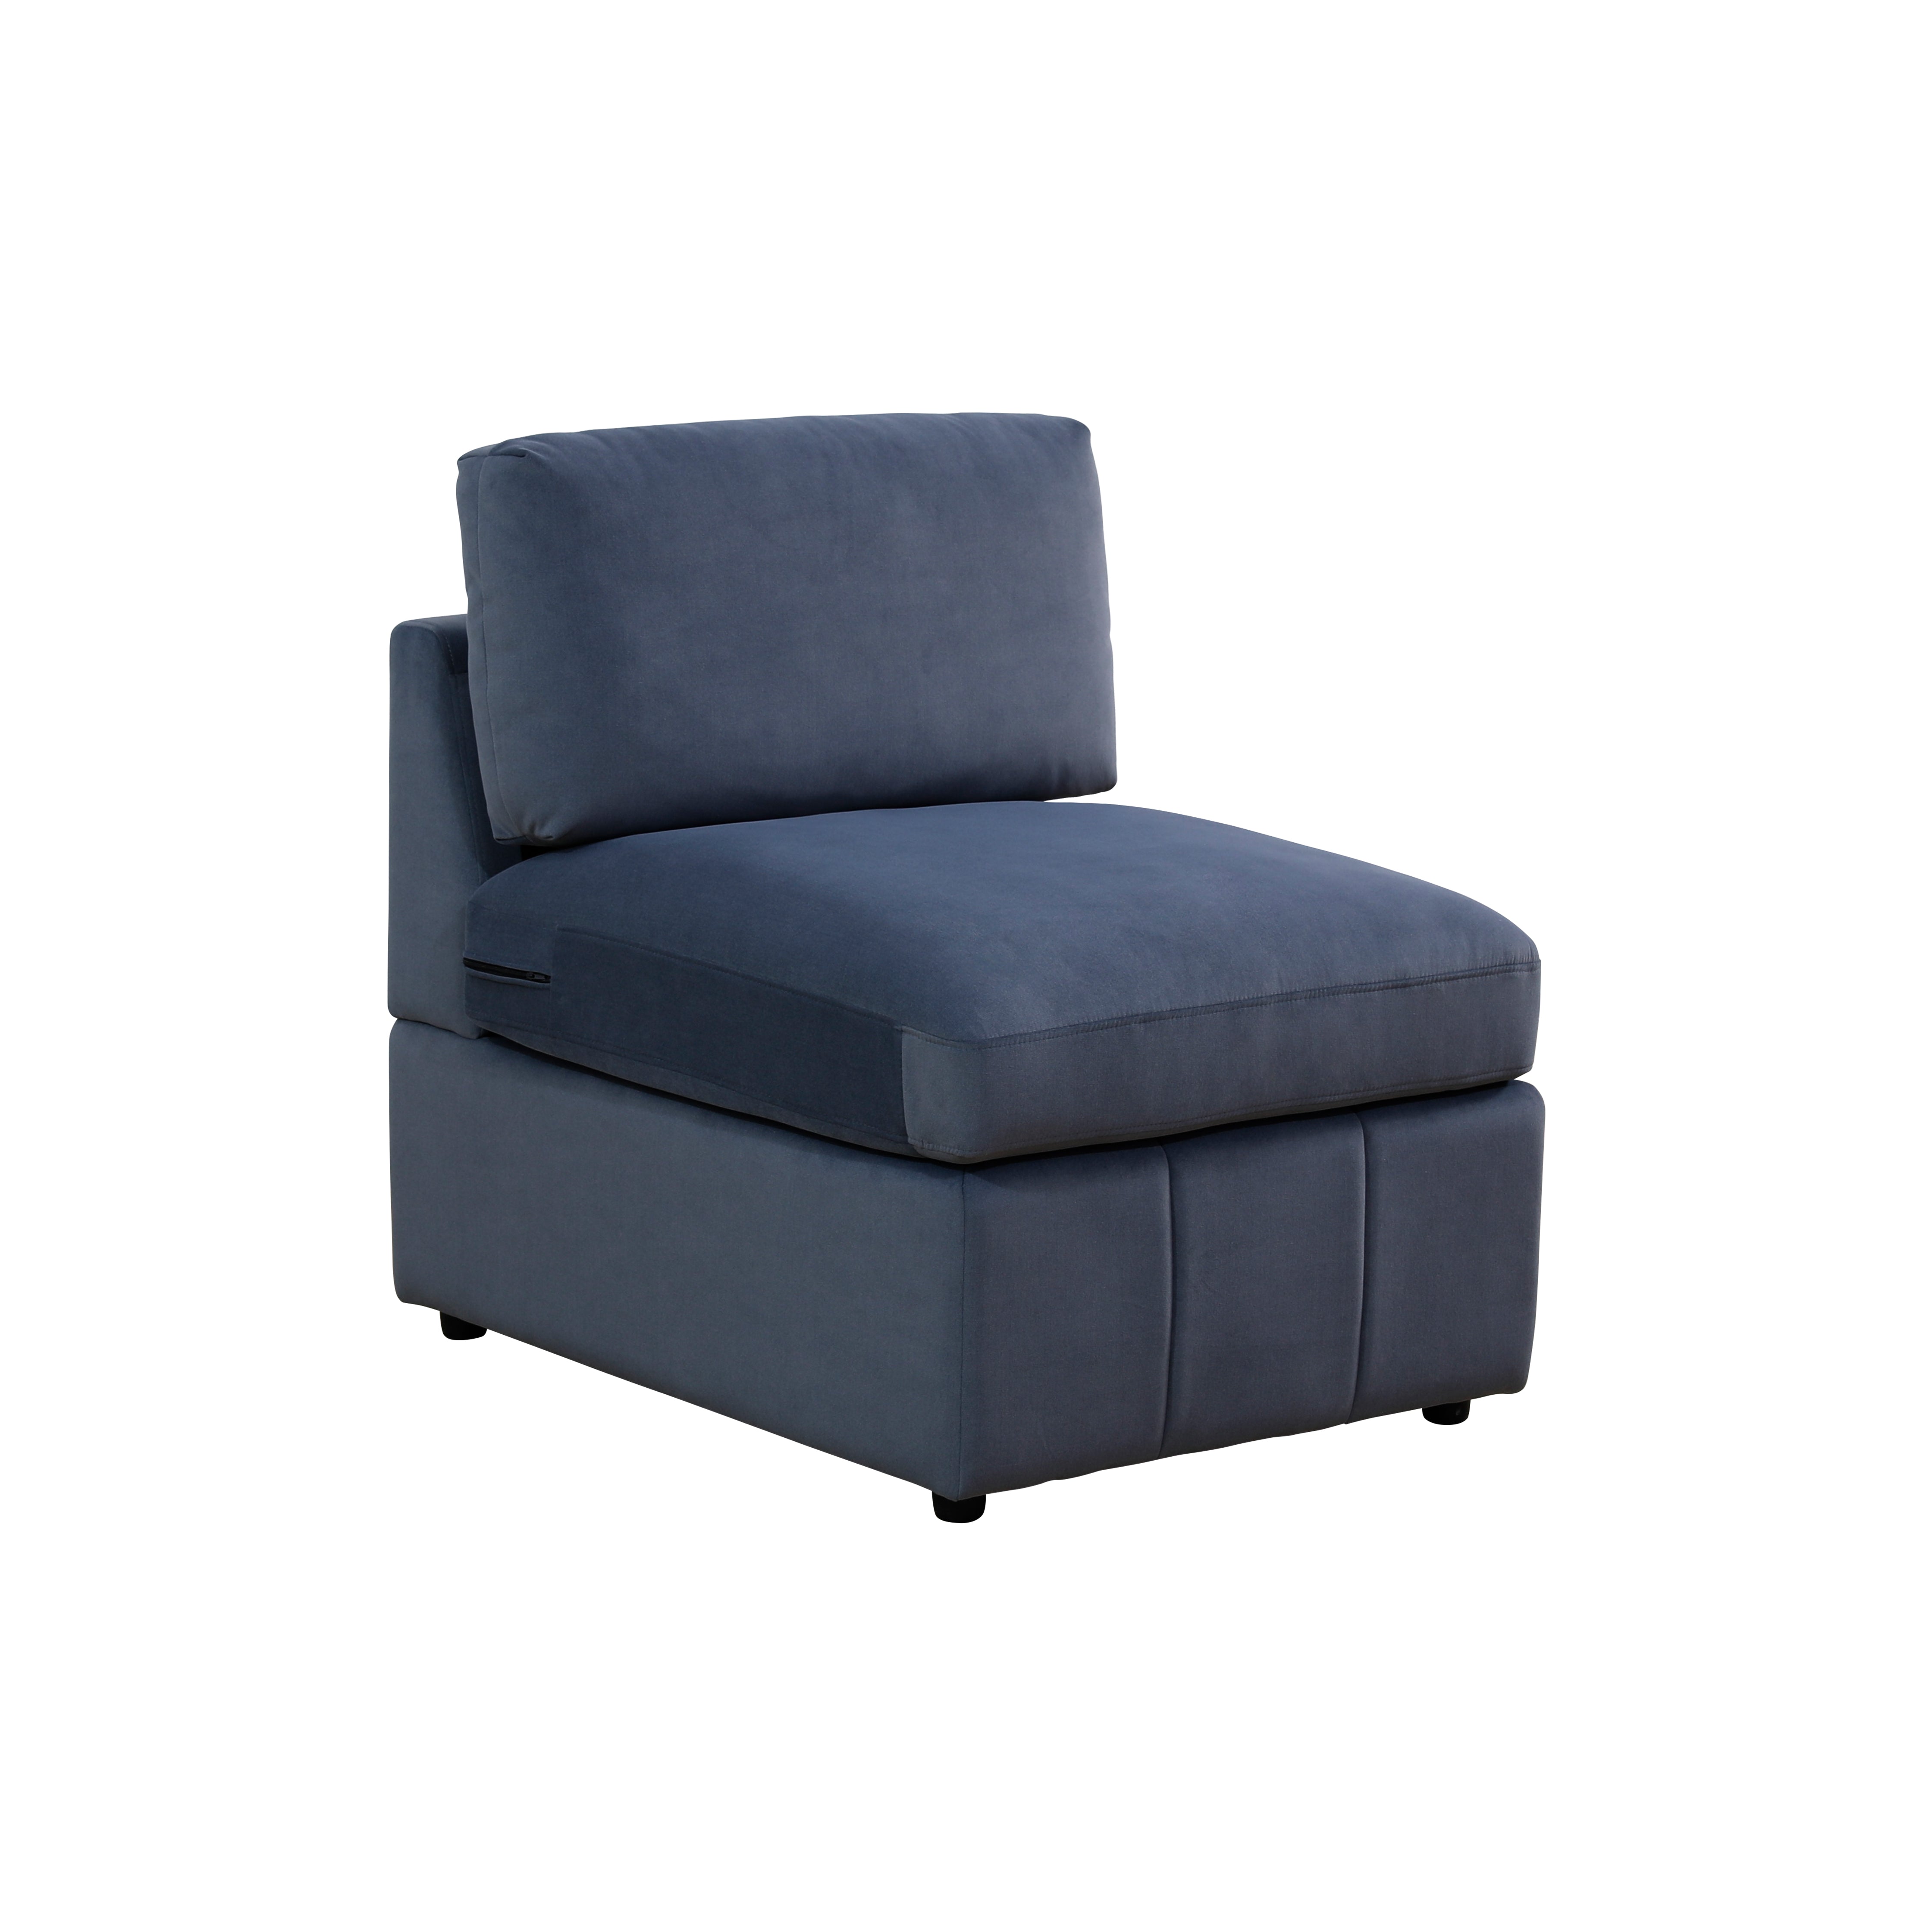 Ainehome Navy Blue Corduroy 6-Seater Combo Sofa Set